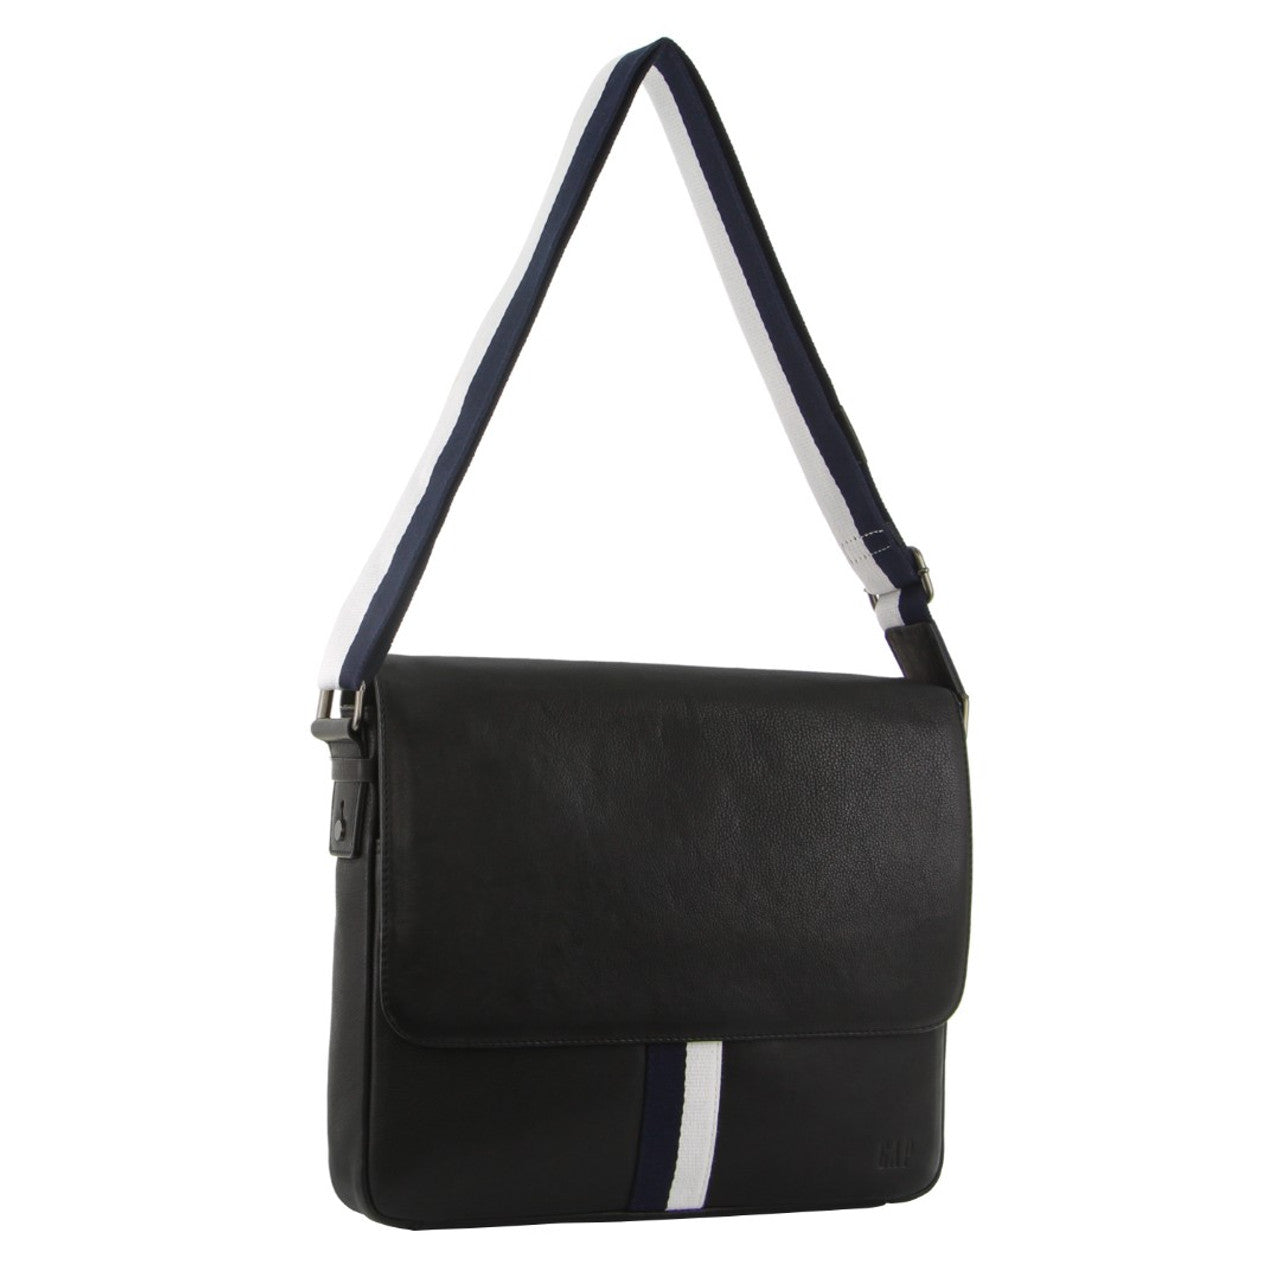 GAP - 16 Leather satchel - Black